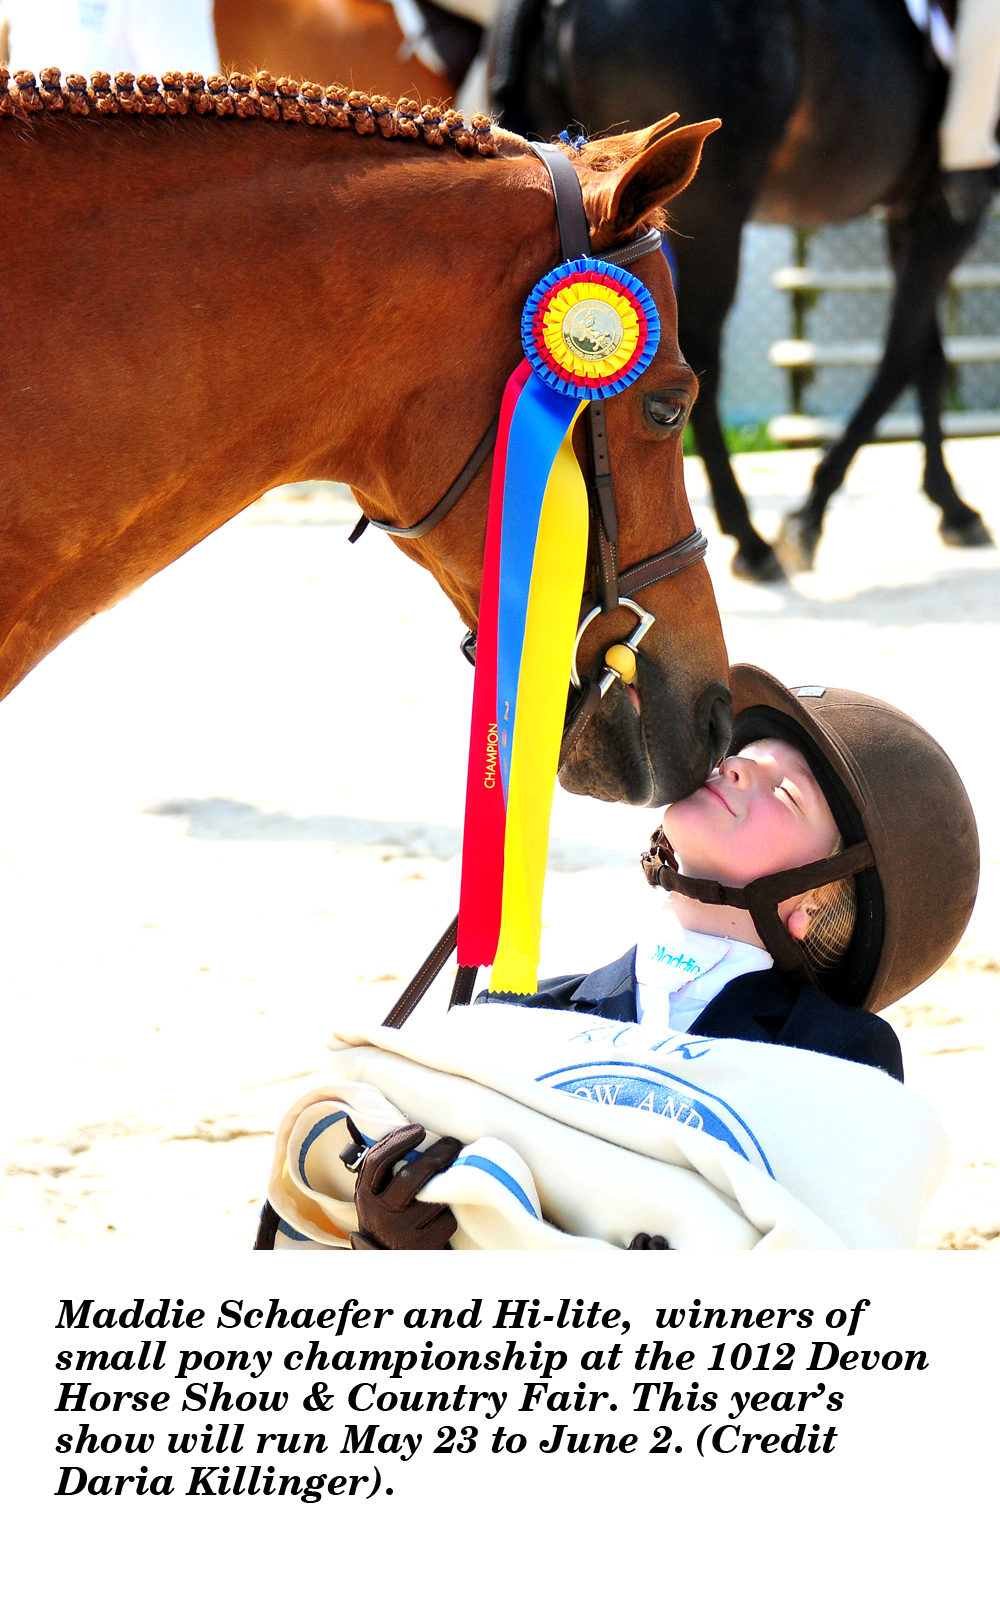 Champion small pony - Hi-Lite and Maddie Schaefer